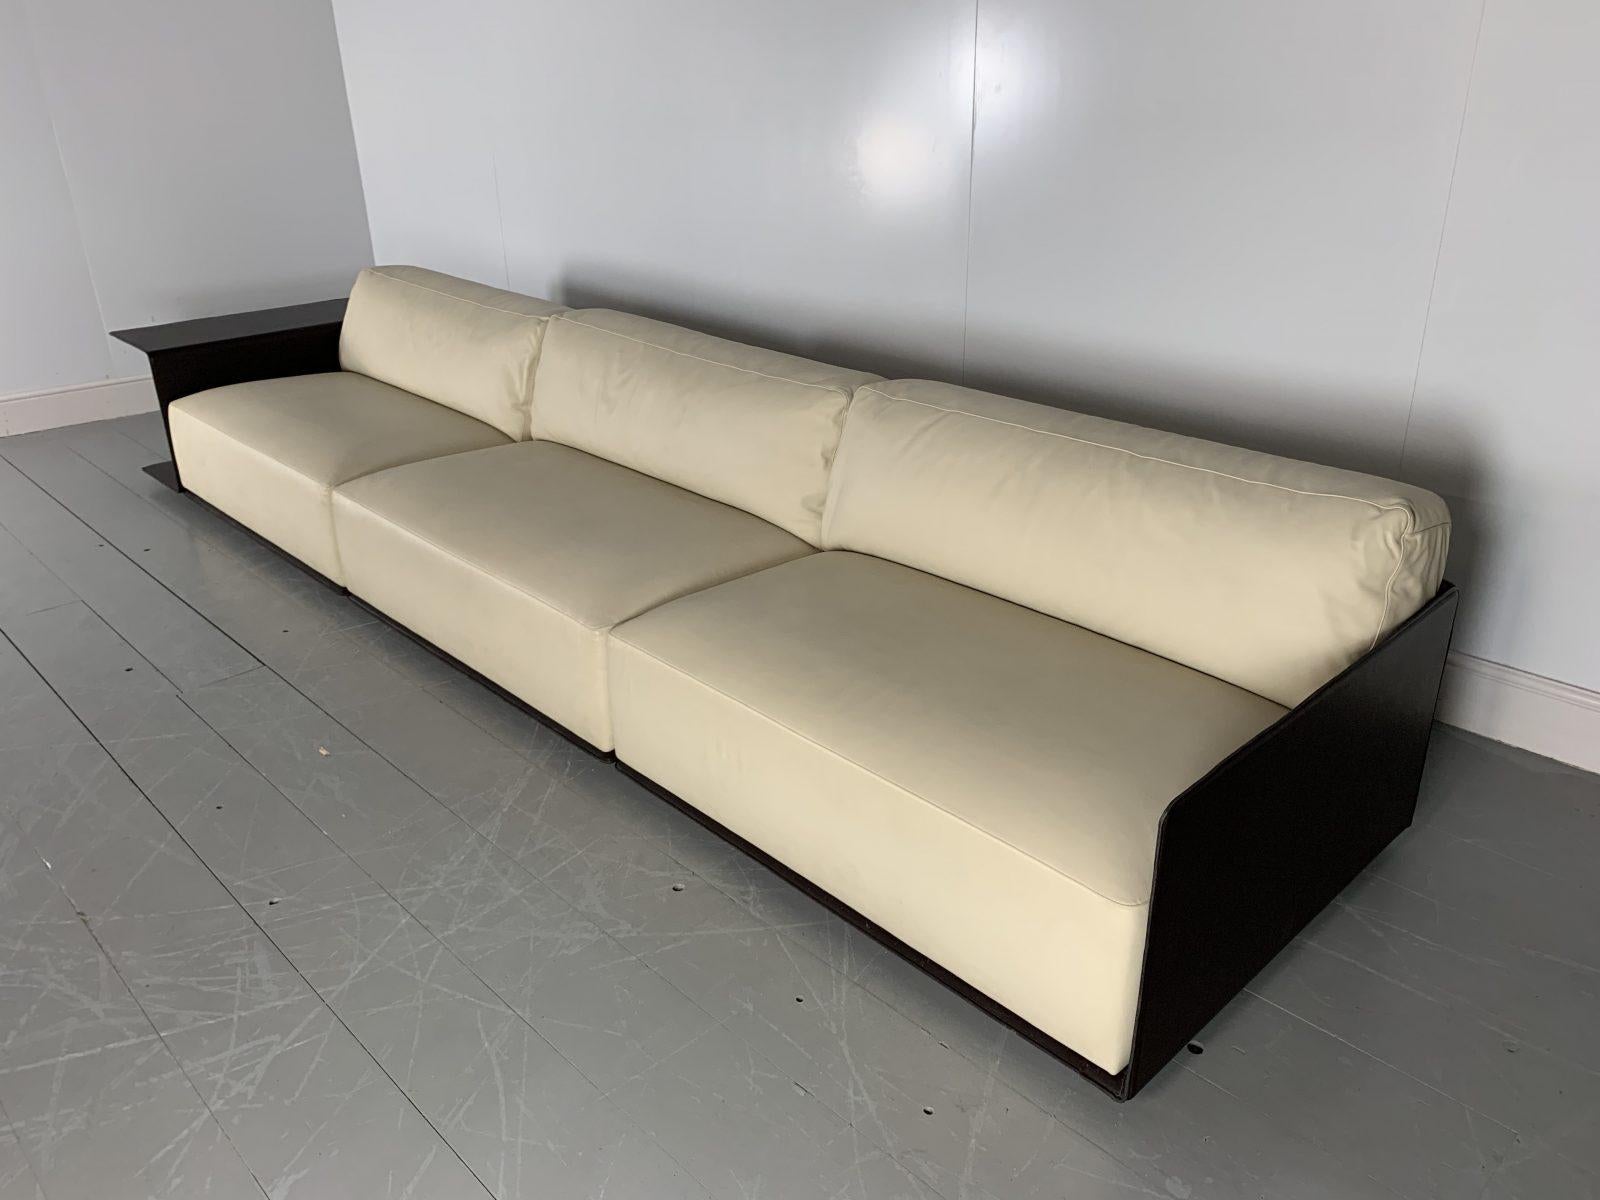 Contemporary Sublime Poltrona Frau “Cassiopea” Large Sofa with Bookcase-End in Saddle Leather